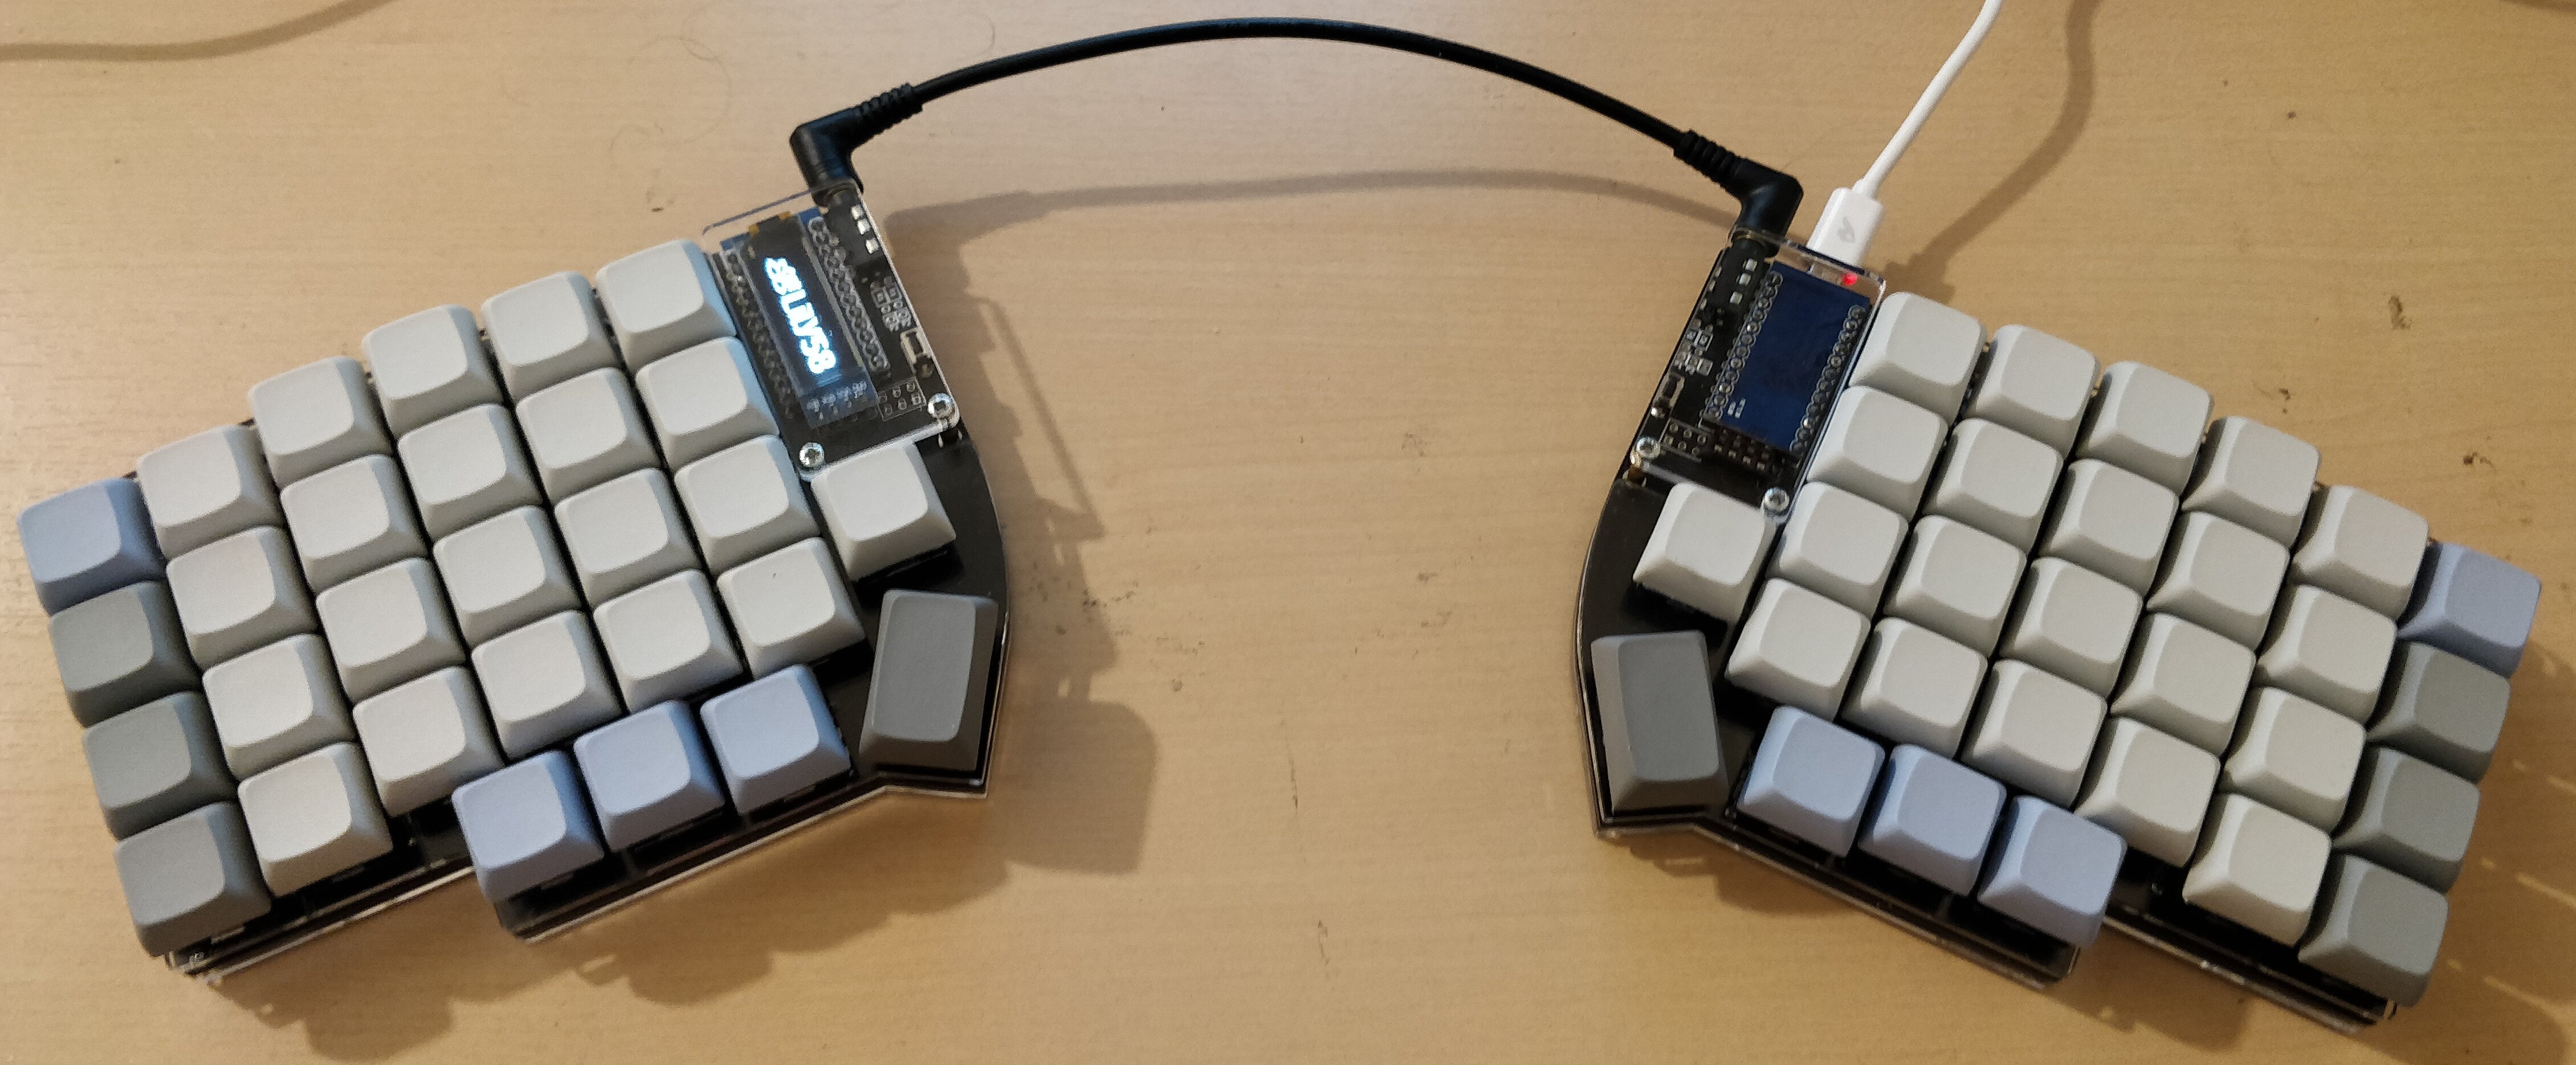 The keyboard on my desk